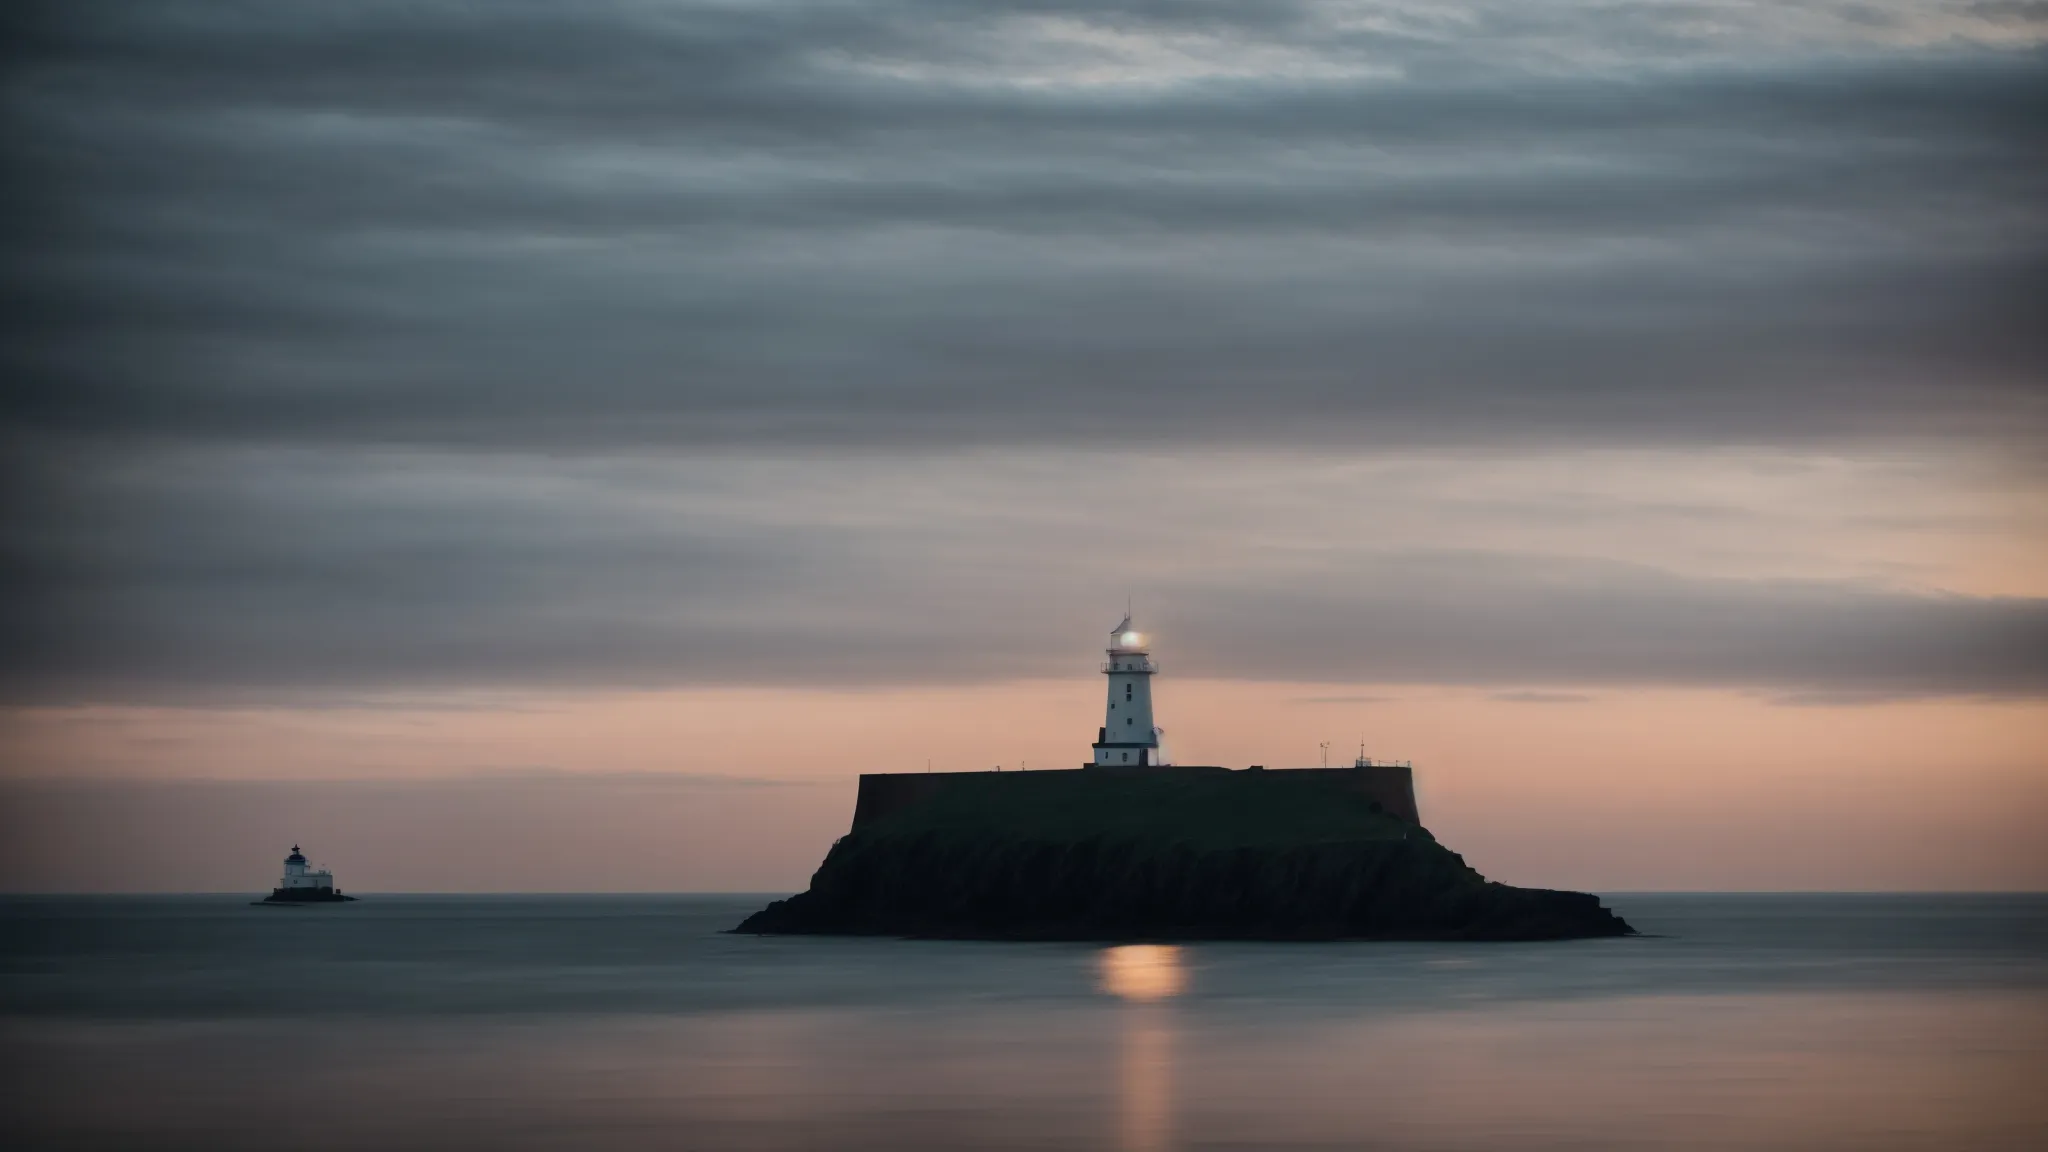 a lighthouse shines over a calm sea at dusk, guiding ships safely to shore.